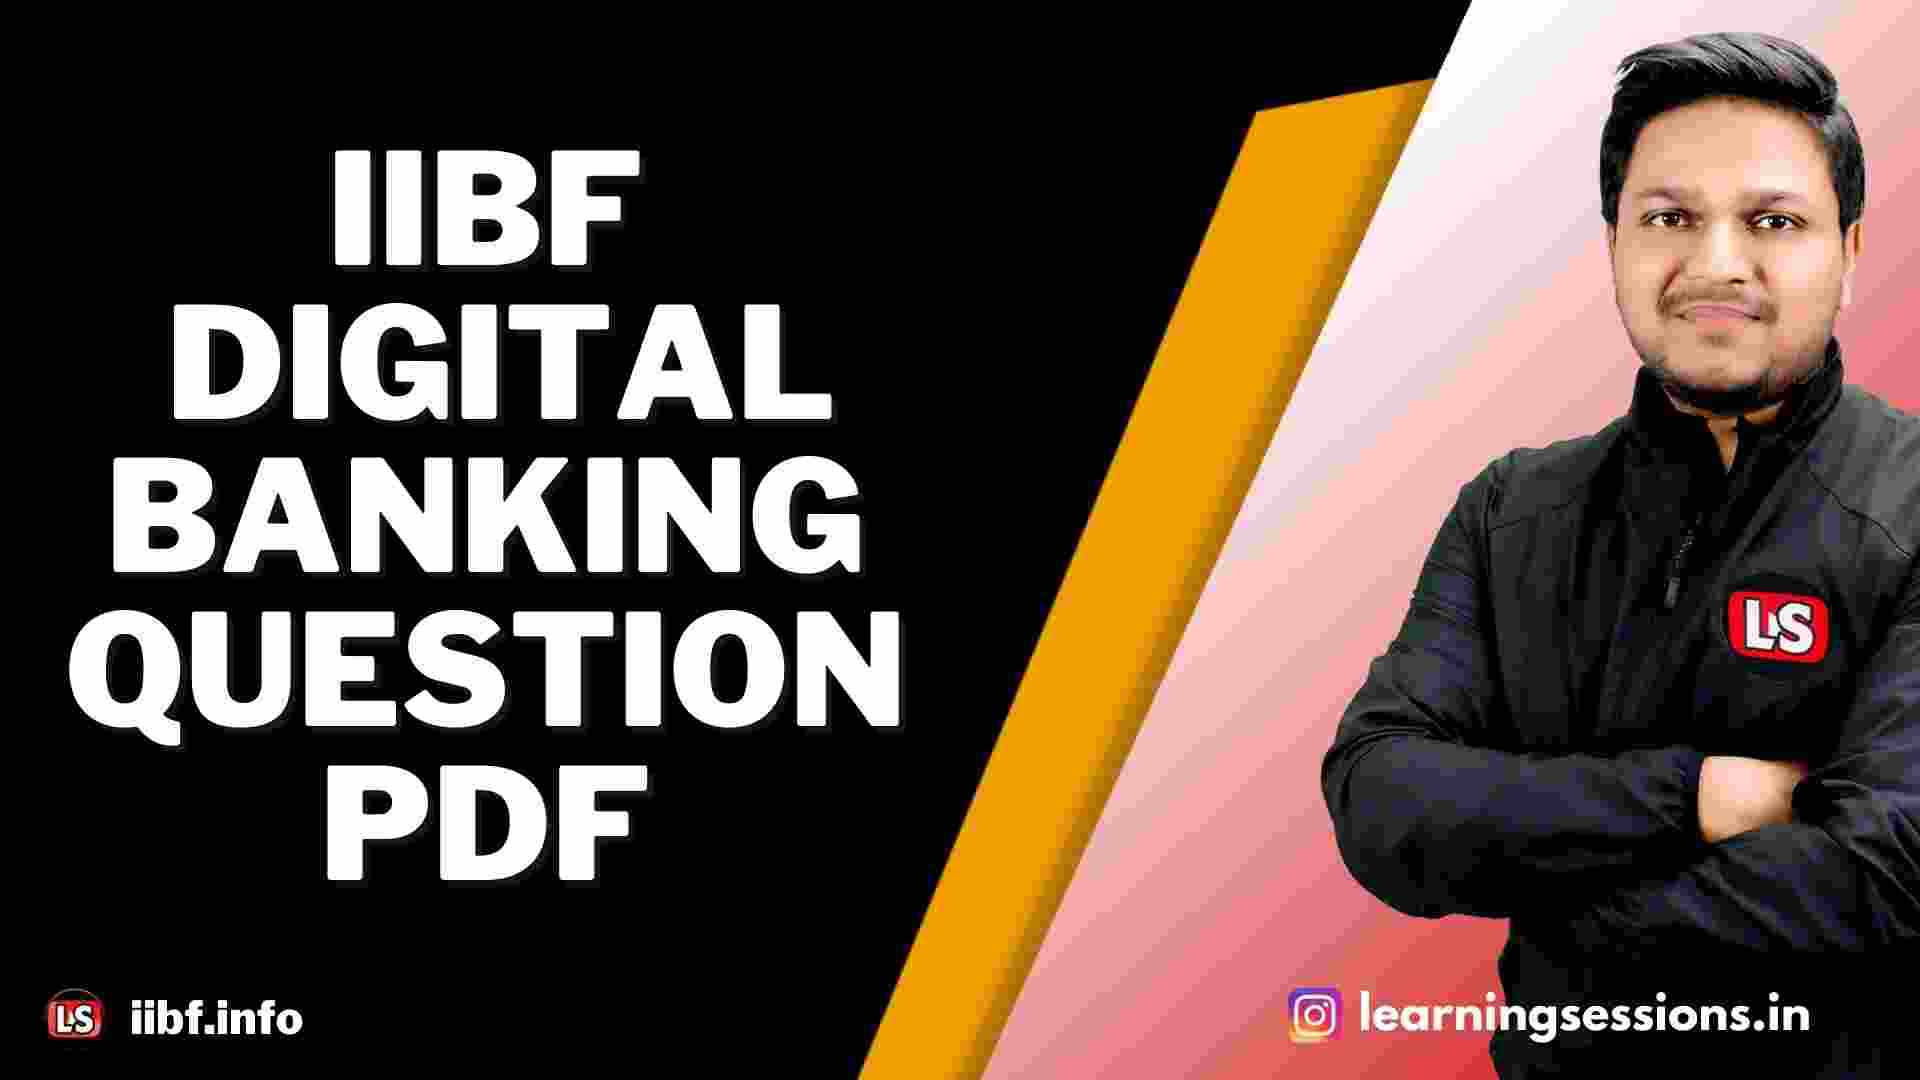 IIBF DIGITAL BANKING QUESTION PDF DOWNLOAD 2022